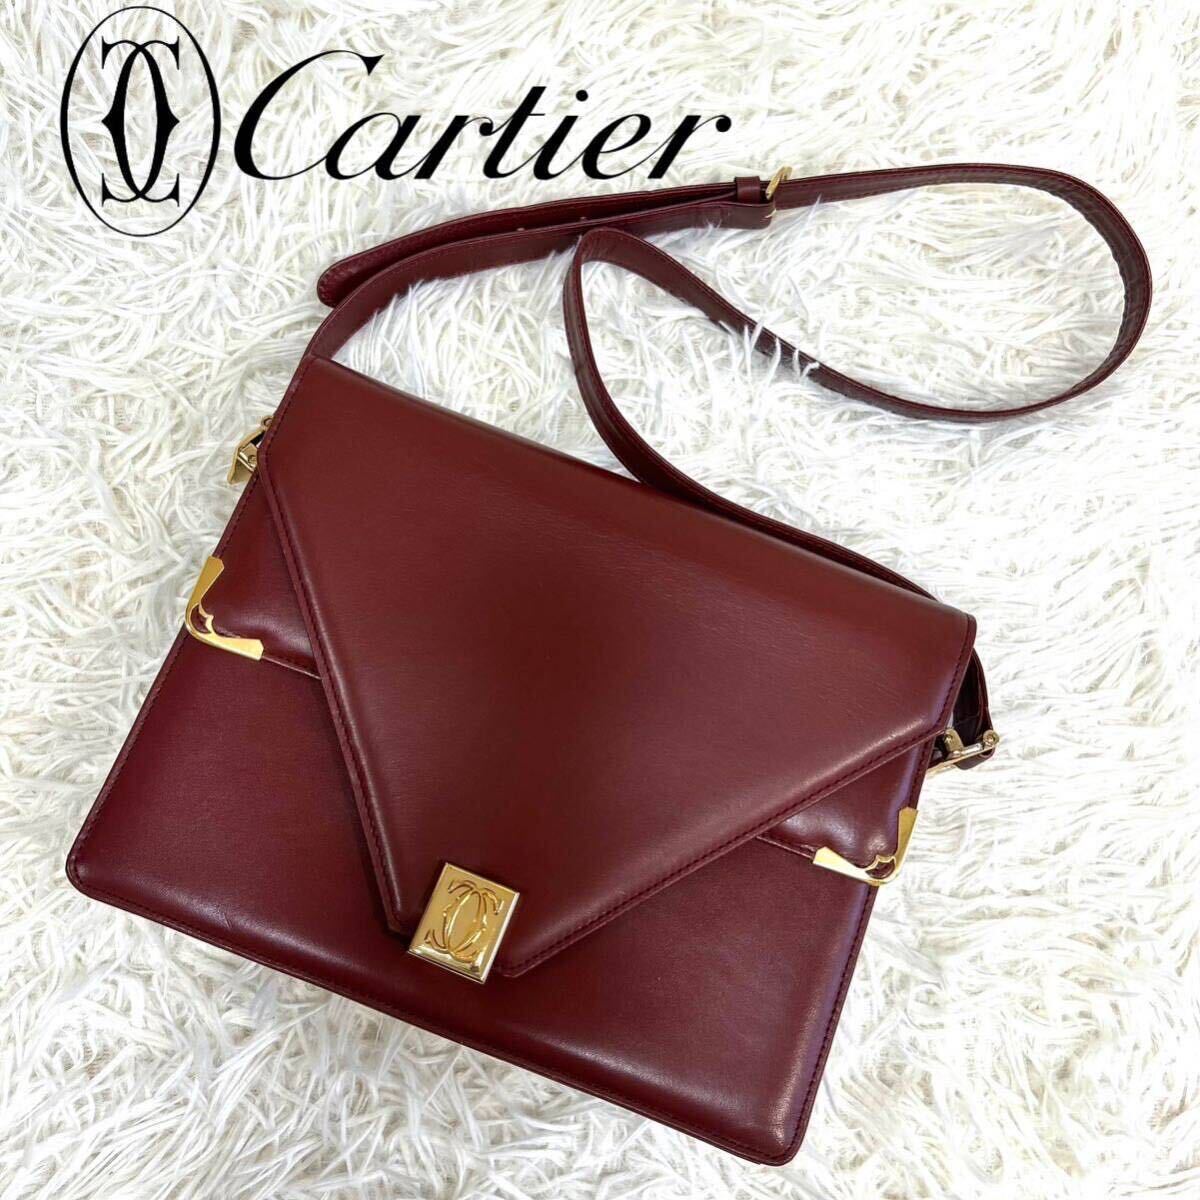 Cartier Cartier сумка на плечо Must линия наклонный .. плечо .. бордо кожа Cross корпус 